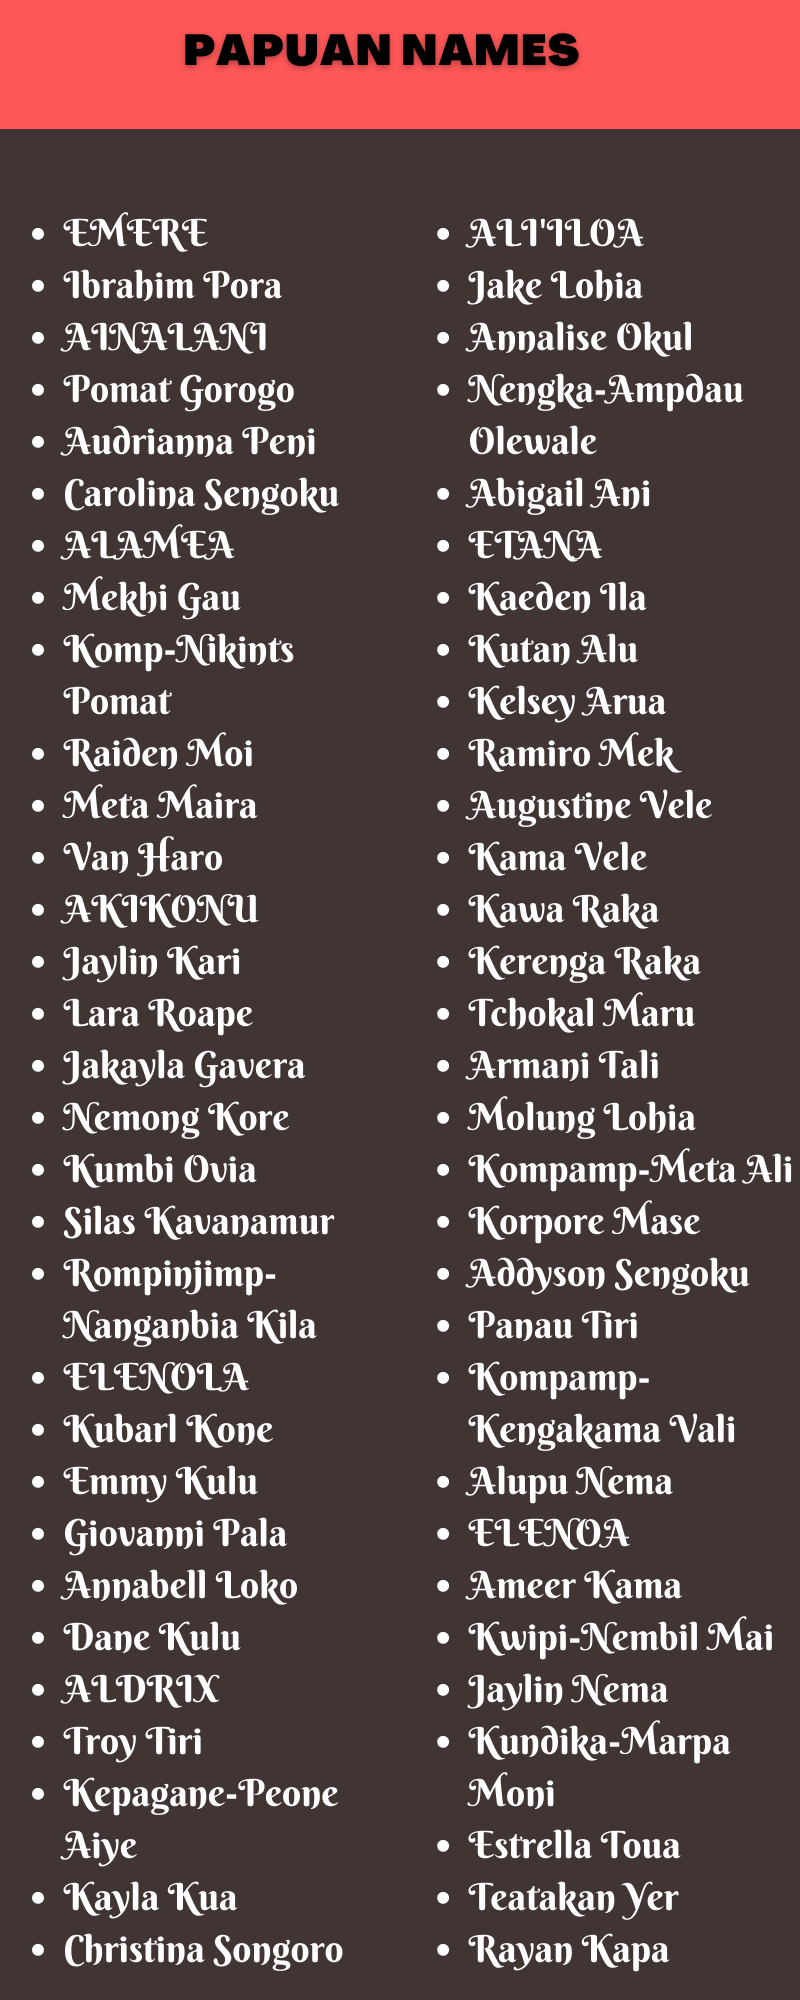 Papuan Names